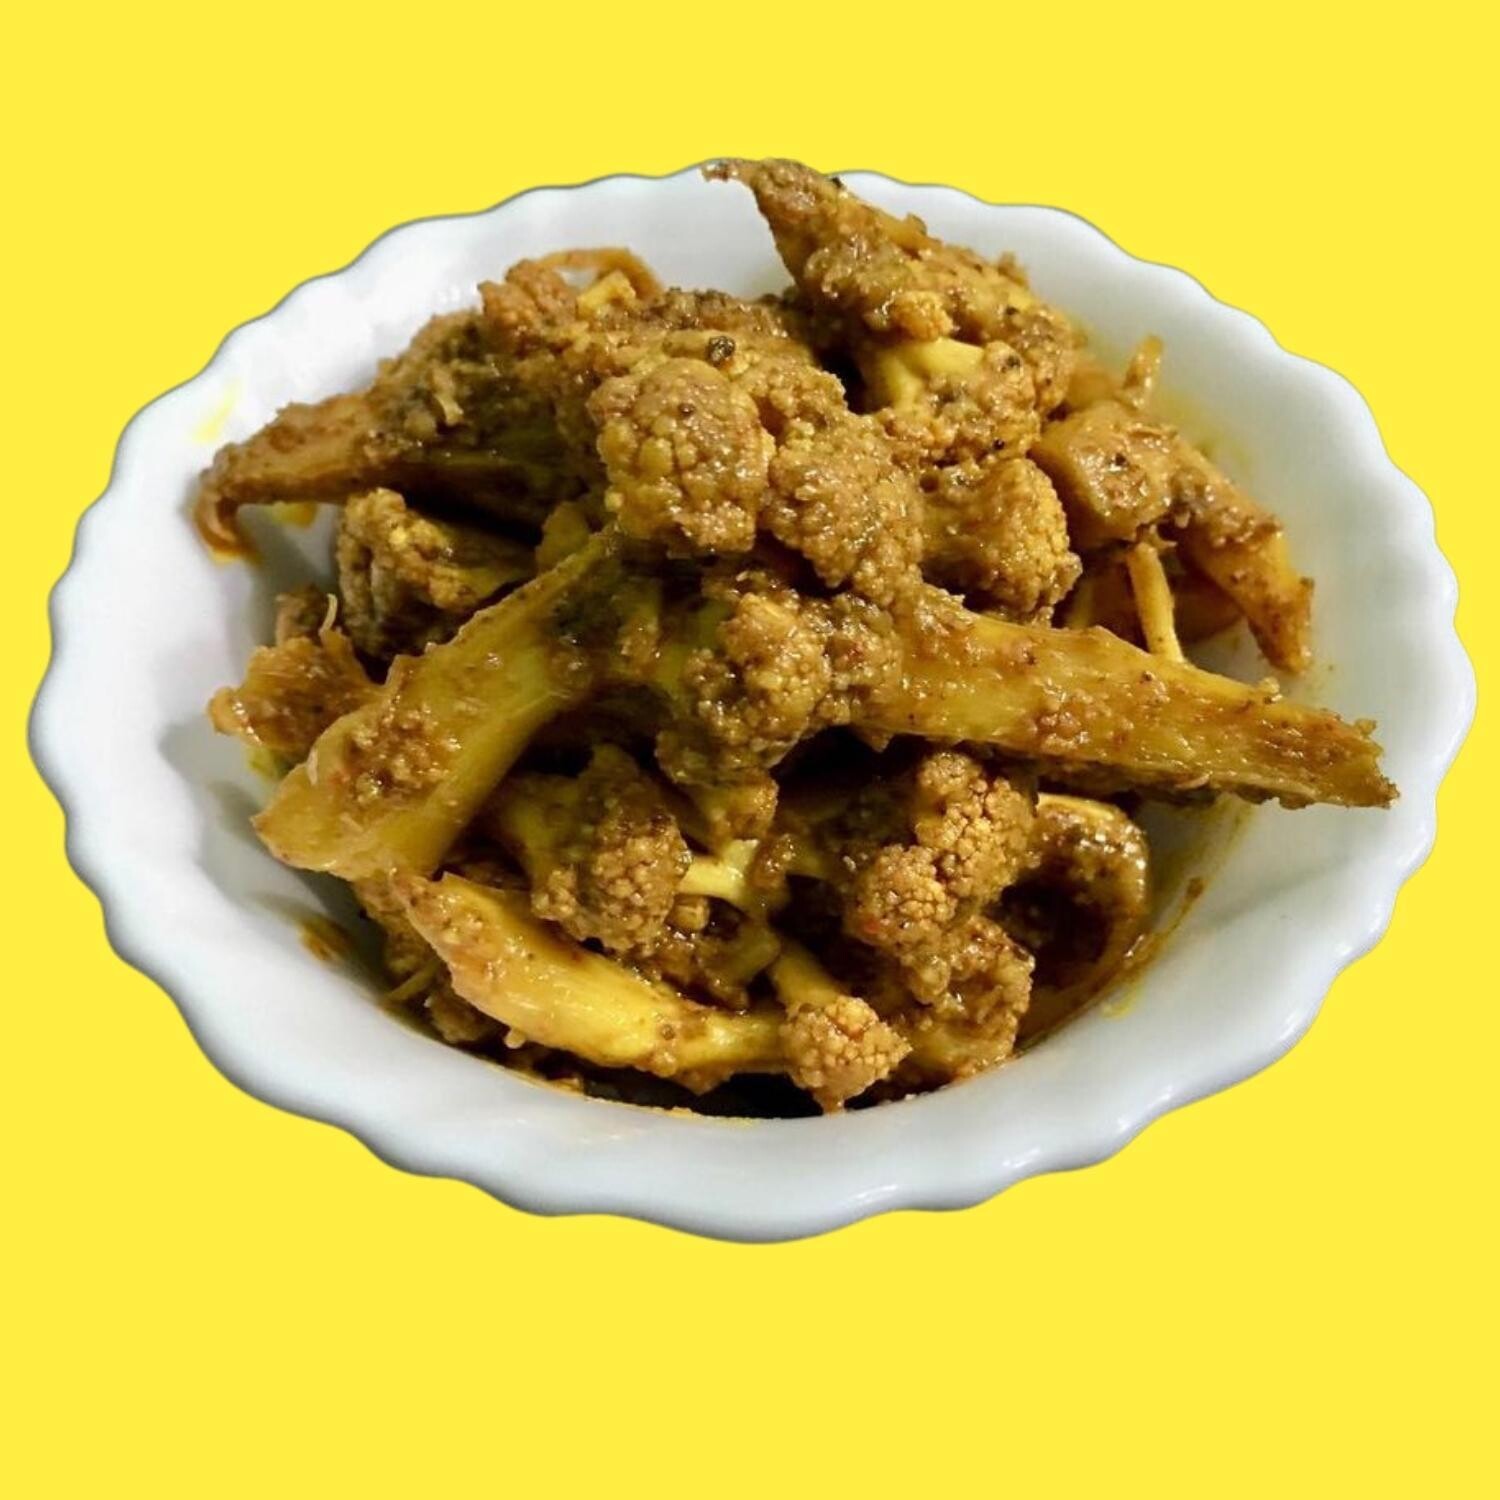 Banarasi Cauliflower Pickle | Gobhi ka Achar | Spiced Cauliflower Pickle | Original Home Made Taste with Mustard Oil | Pantry Must Have | 400GM | Pack of 1